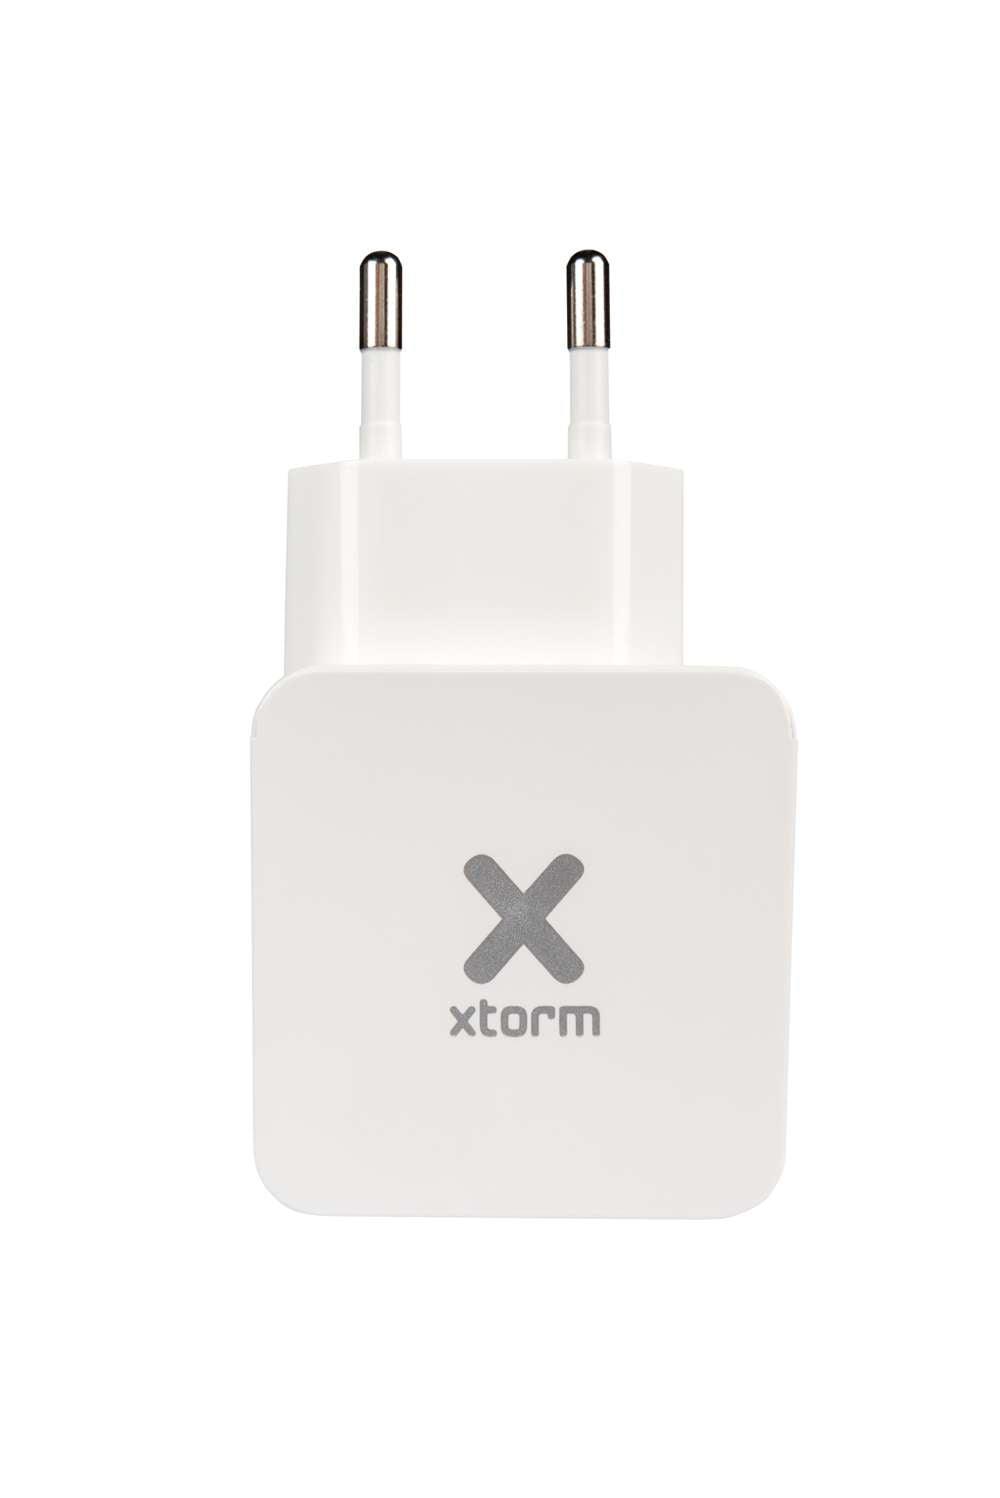 Xtorm Xtorm CX030 Original AC Adapter USB-C PD 18W + USB-C kabel